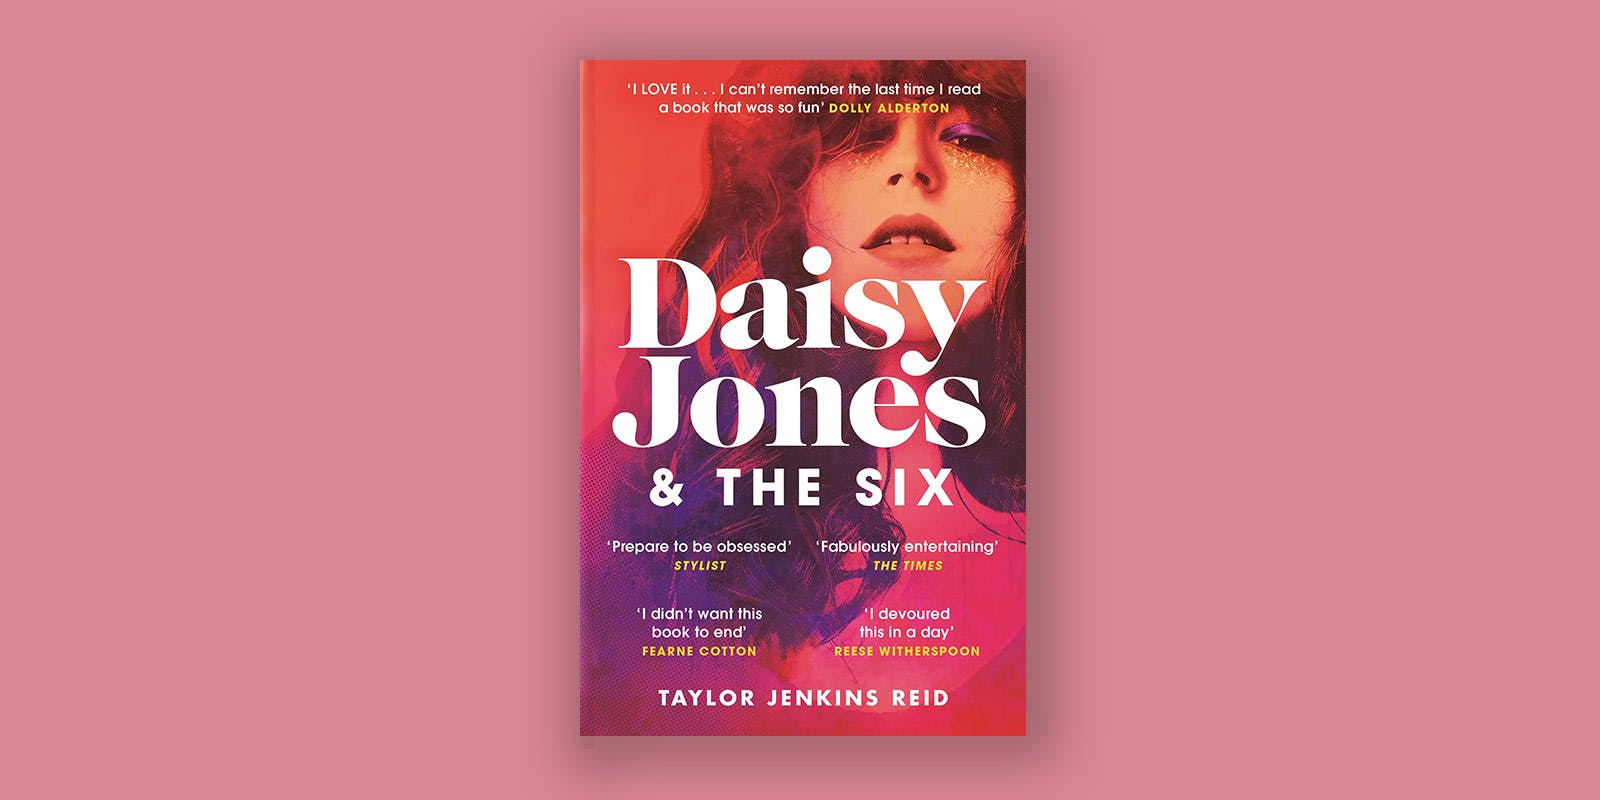 Daisy Jones and The Six – meet the band